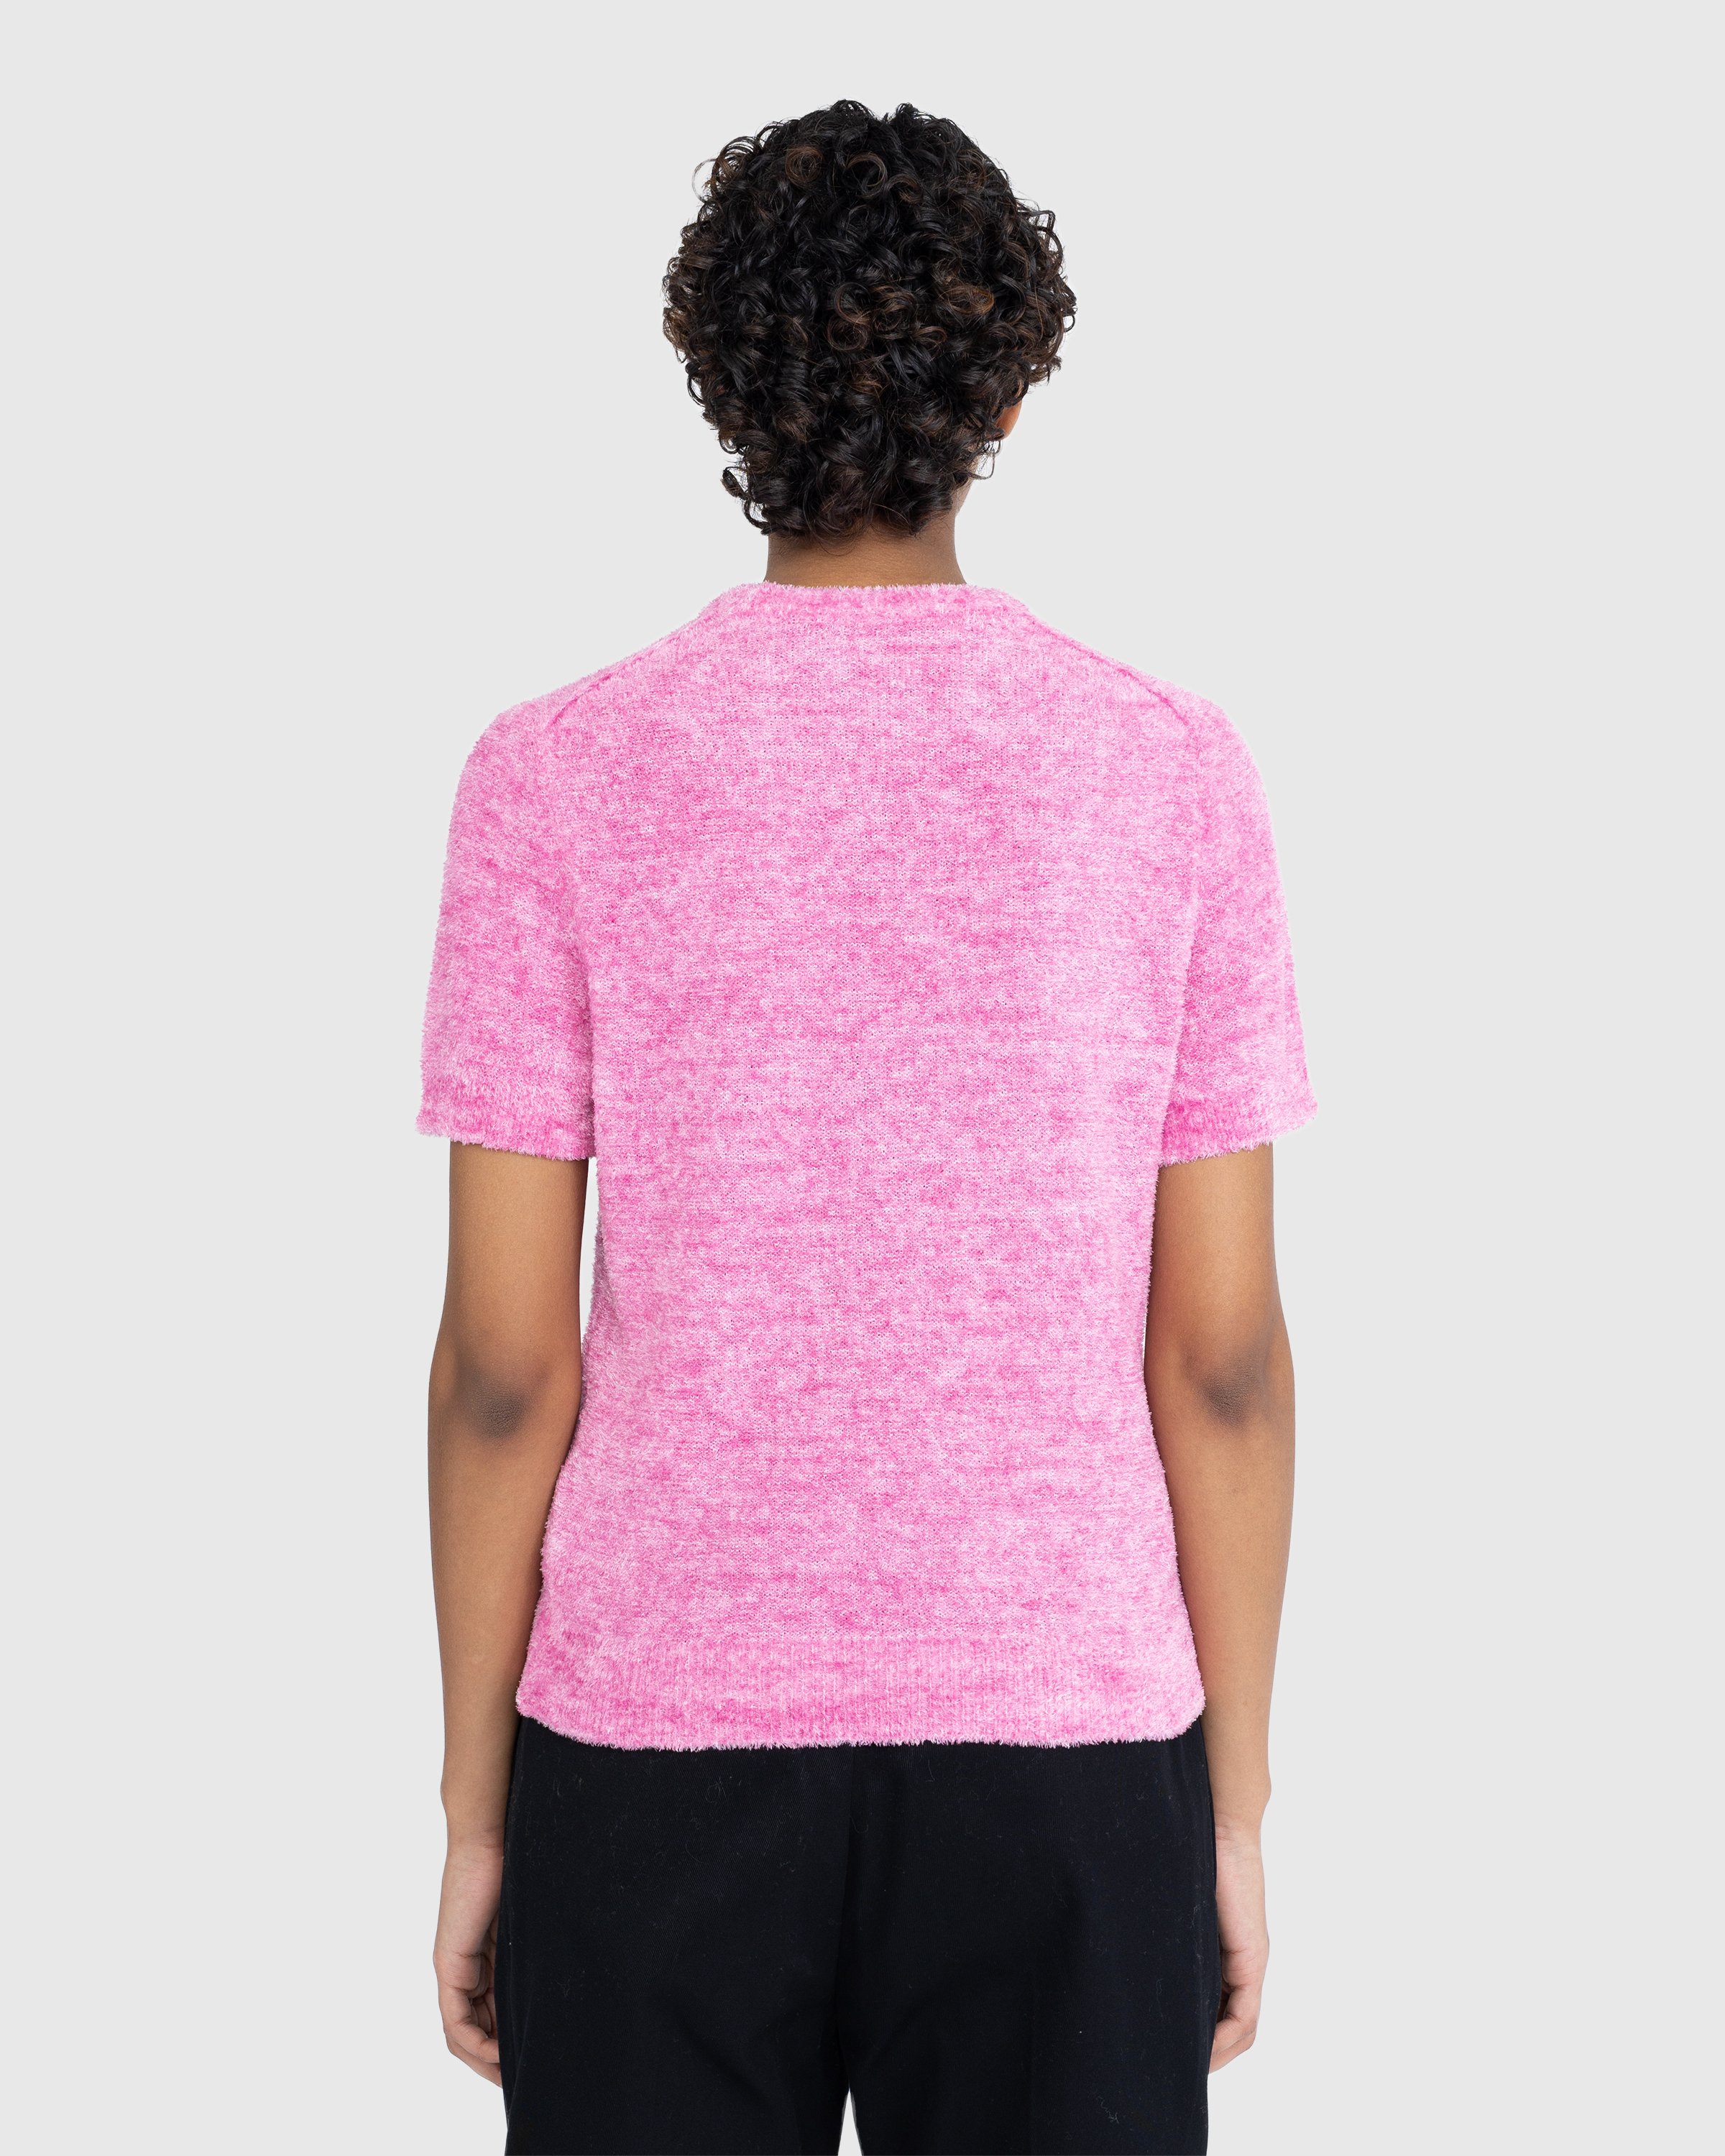 Acne Studios - Short-Sleeve Crewneck Sweater Pink - Clothing - Pink - Image 4